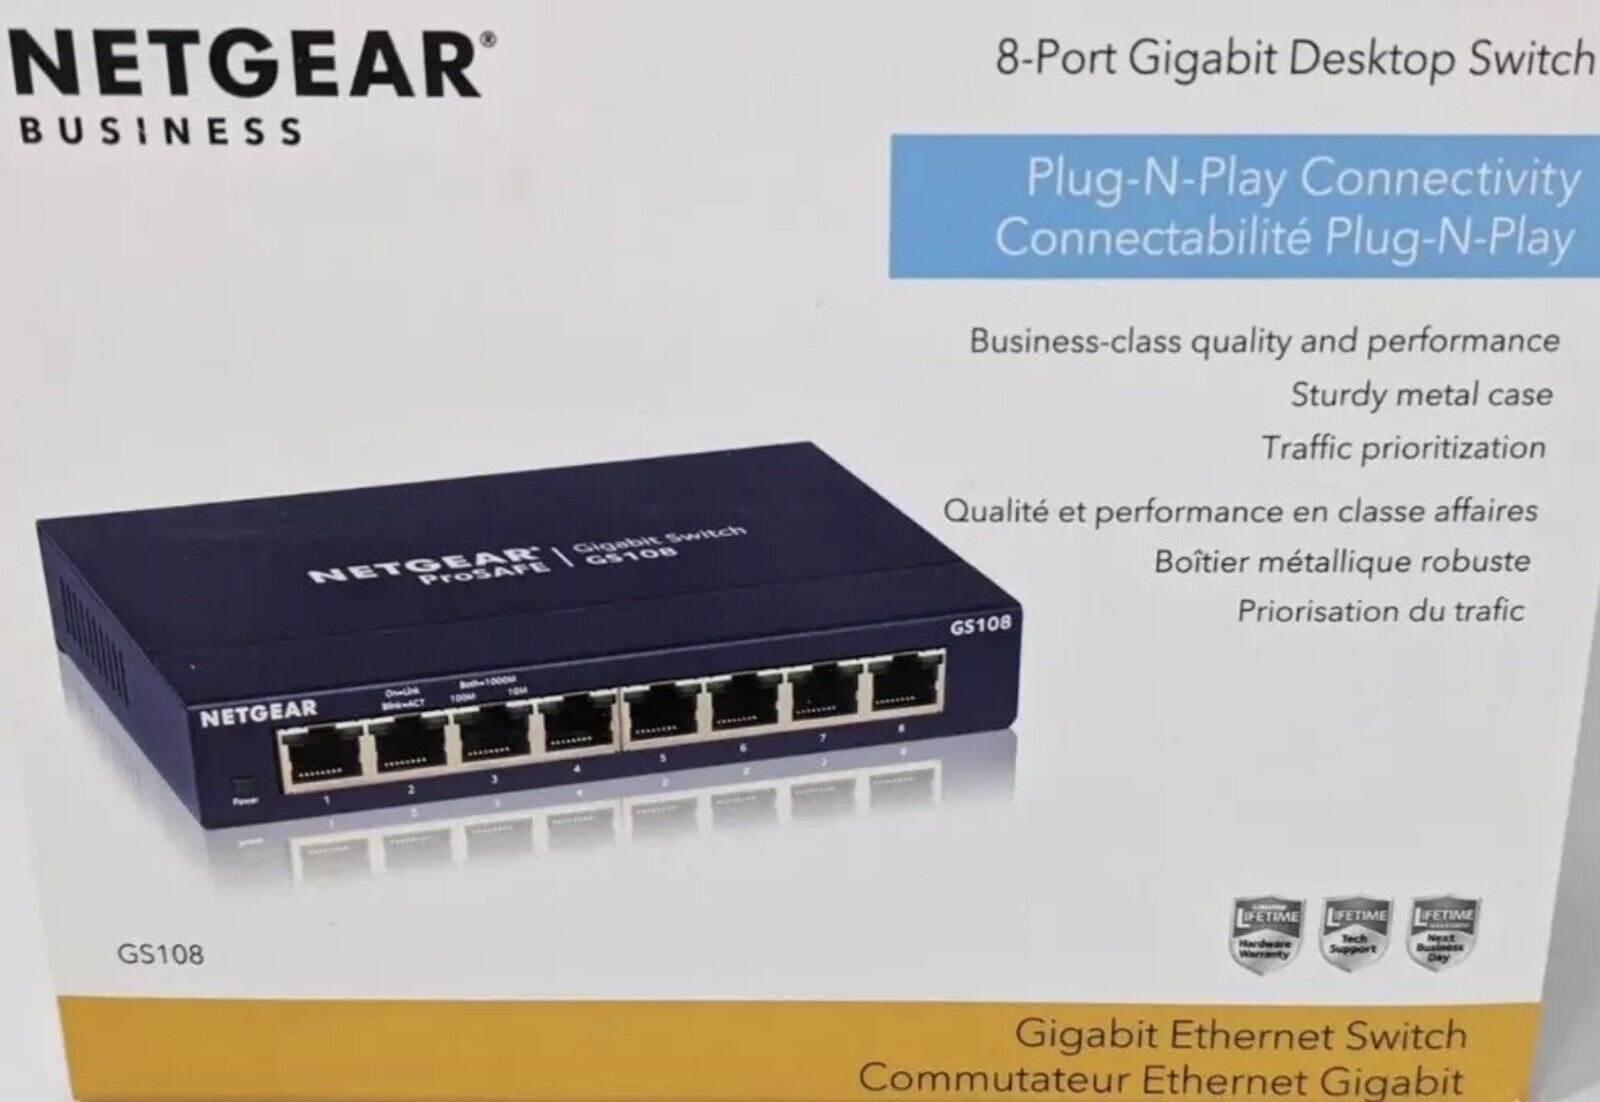 Netgear Business 8-Port Desktop Switch Gigabit Ethernet Switch - #GS108